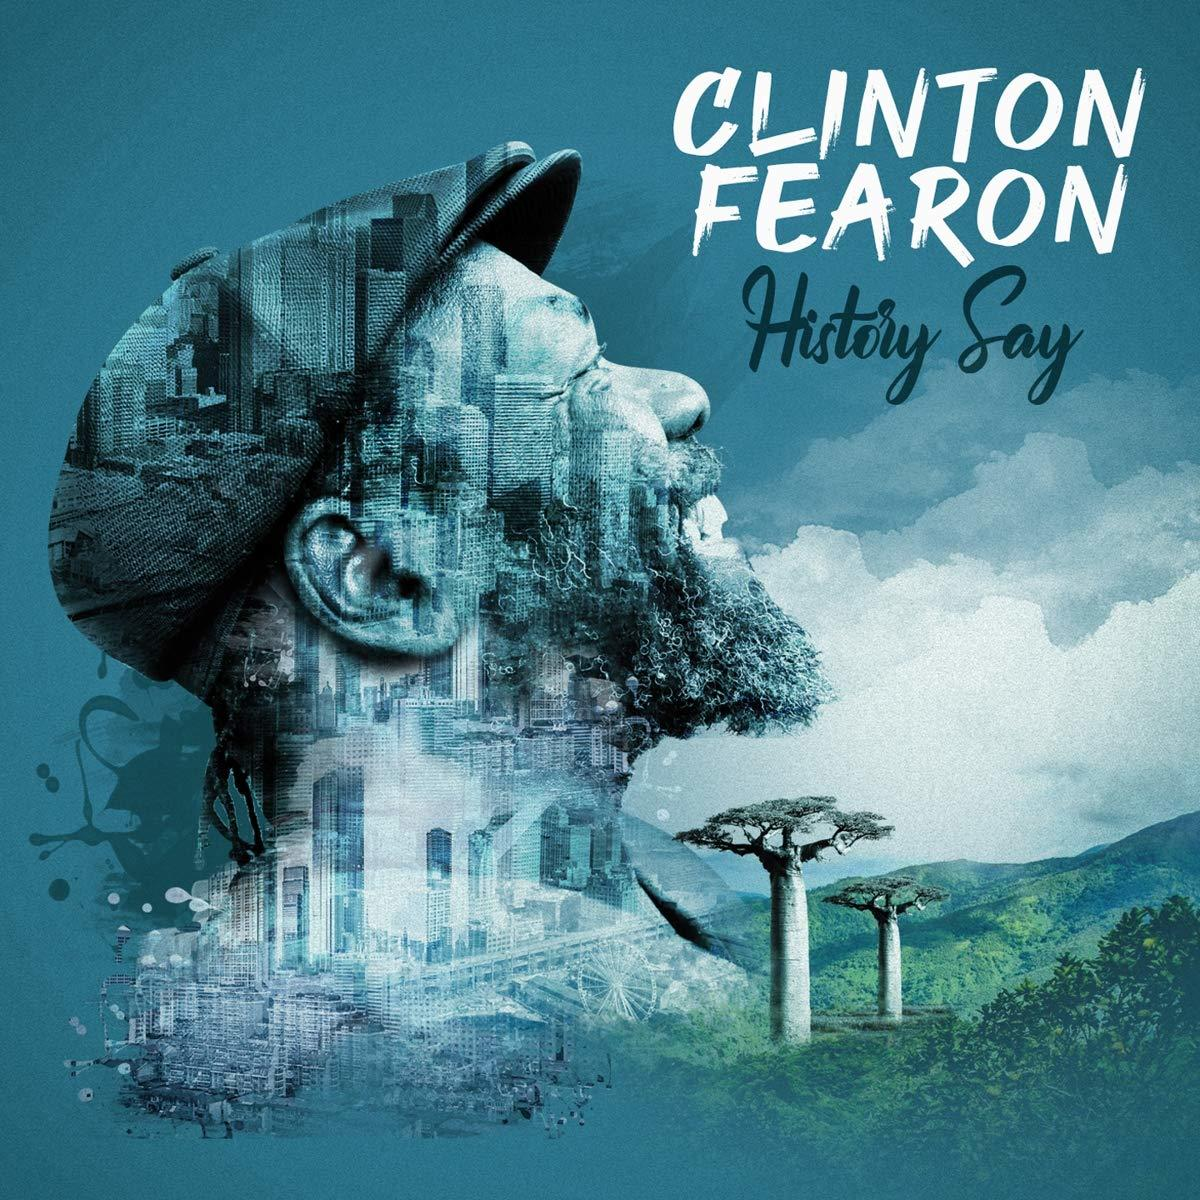 Fearon - Clinton (Vinyl) - Say History